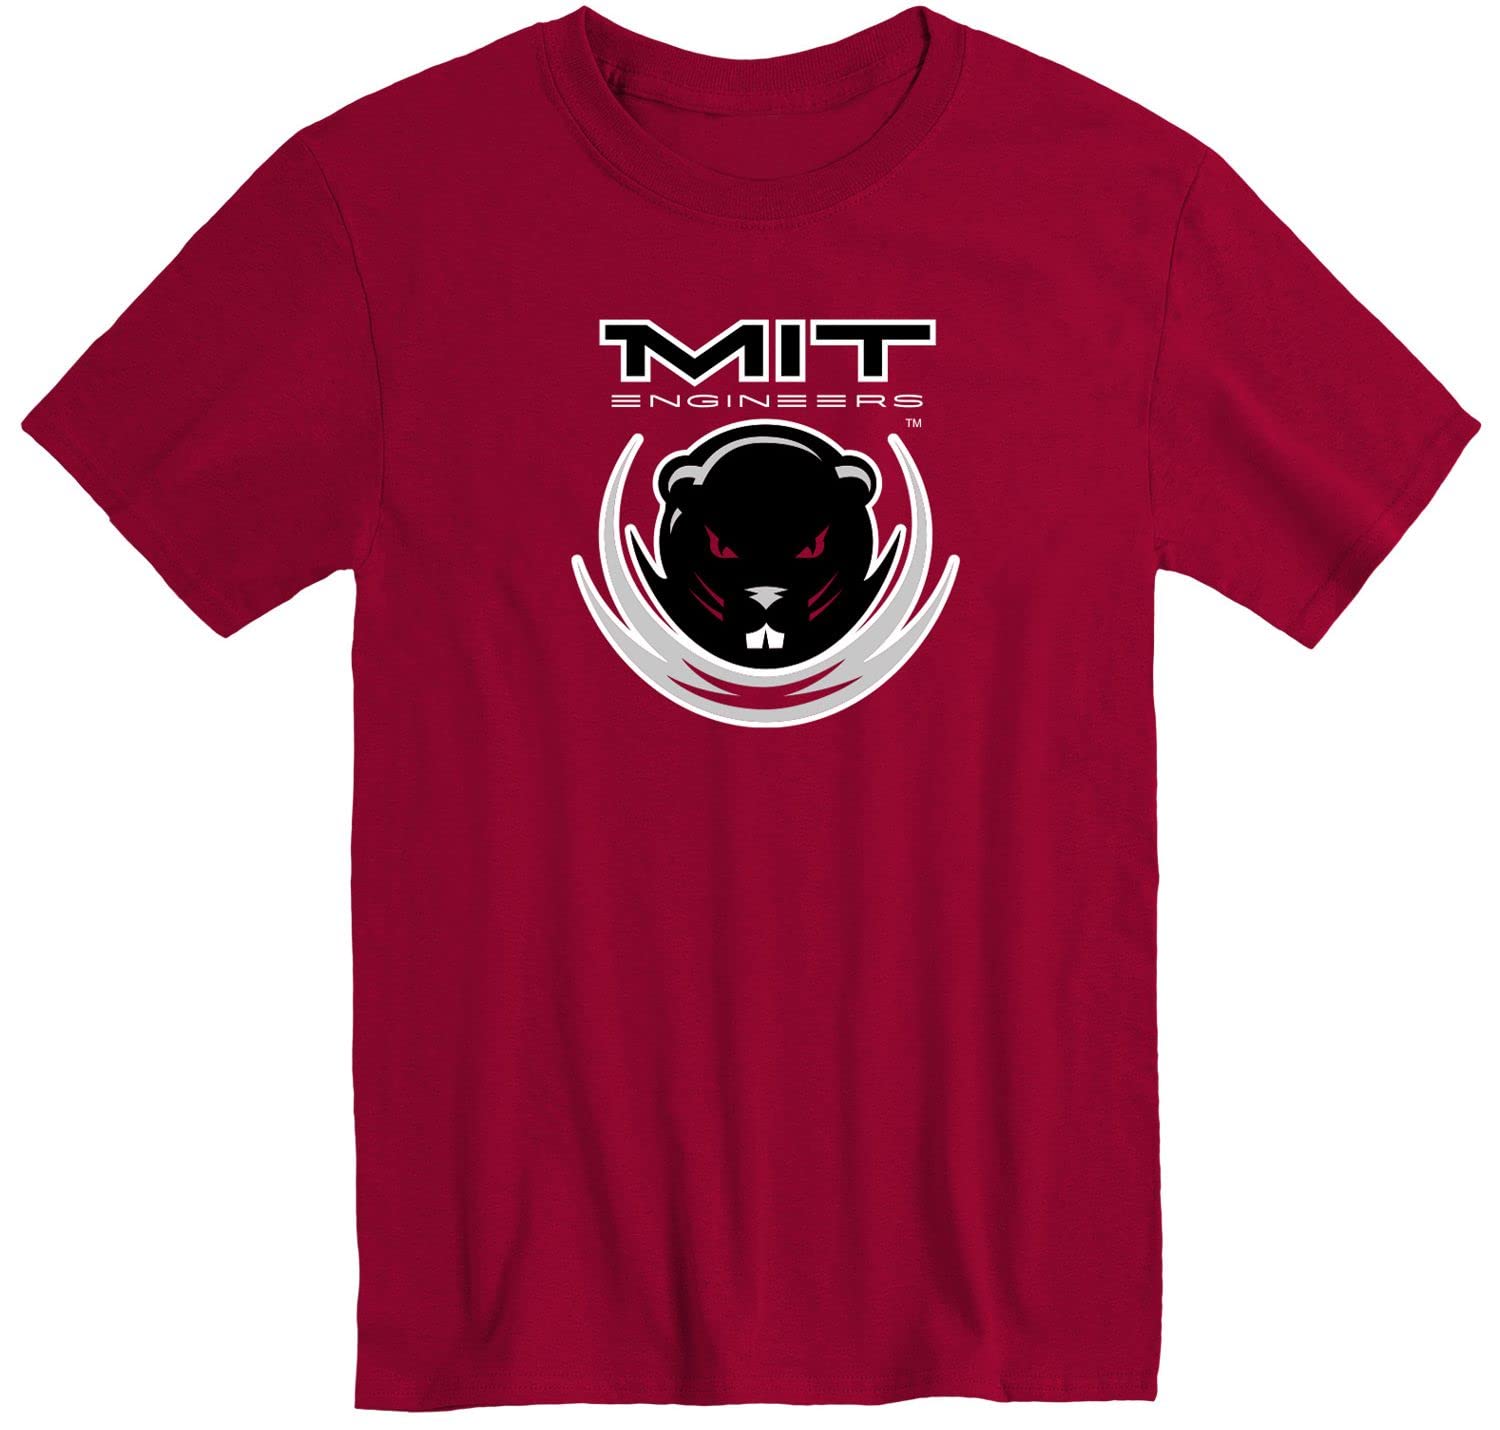 Barnesmith Massachusetts Institute of Technology MIT Engineers Short-Sleeve T-Shirt, Spirit, Maroon, Medium